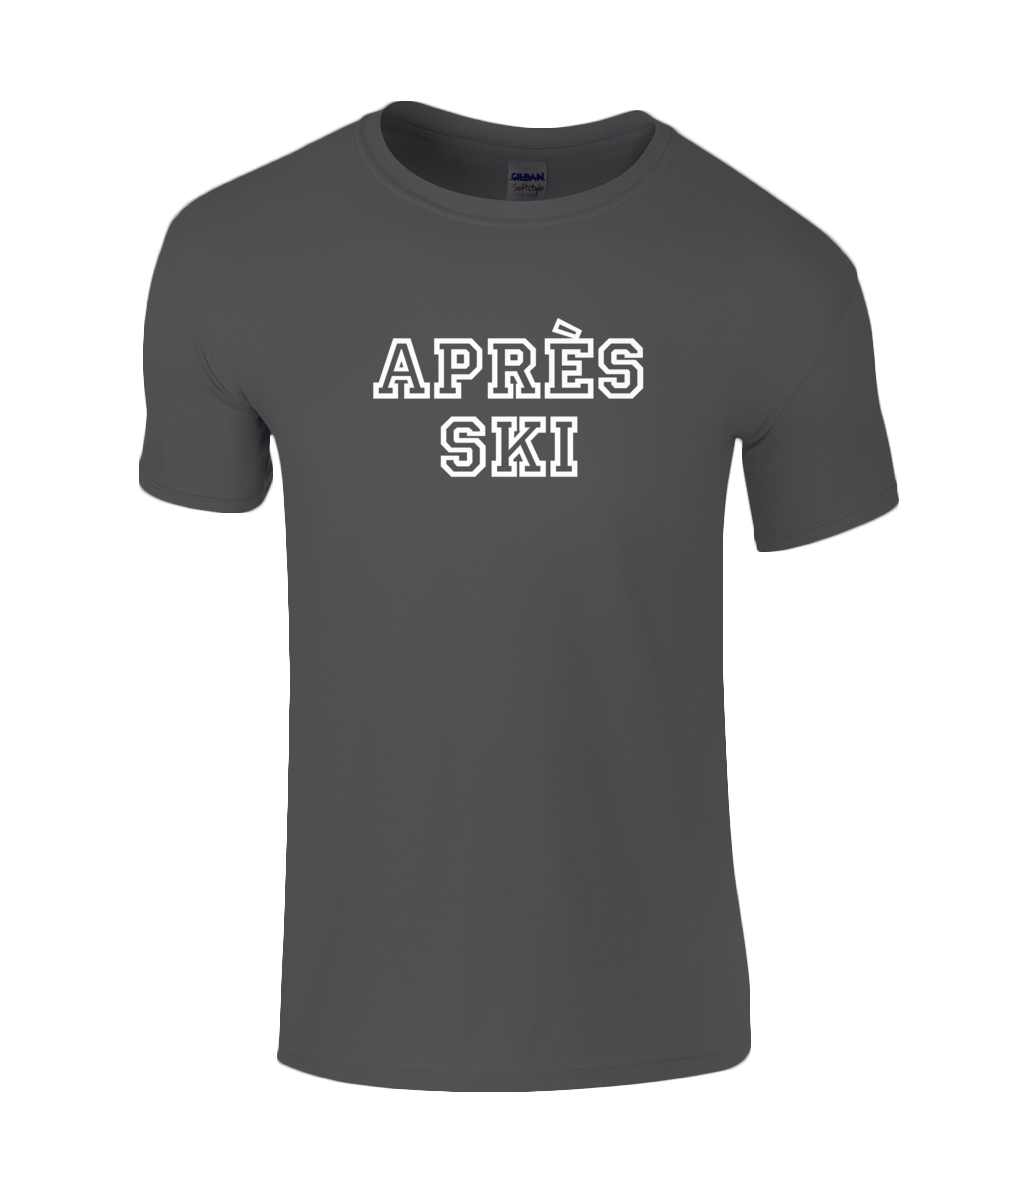 Apres Ski Kids T-Shirt